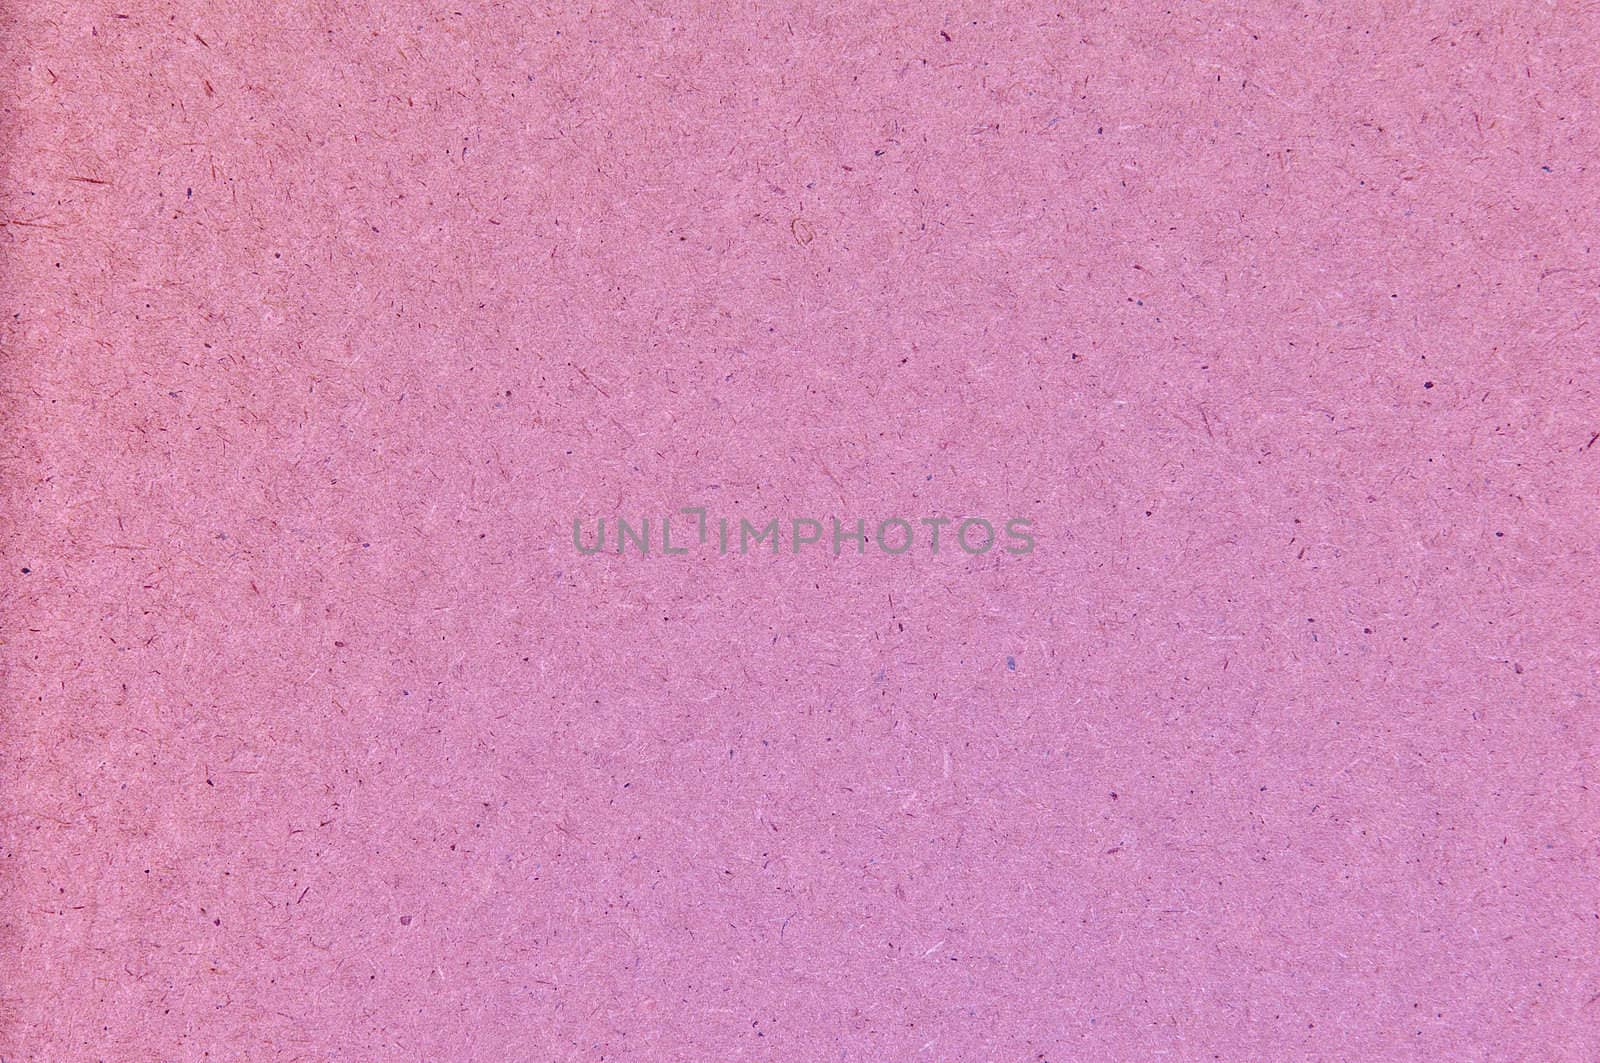 Background the old cardboard pink color by LeksusTuss